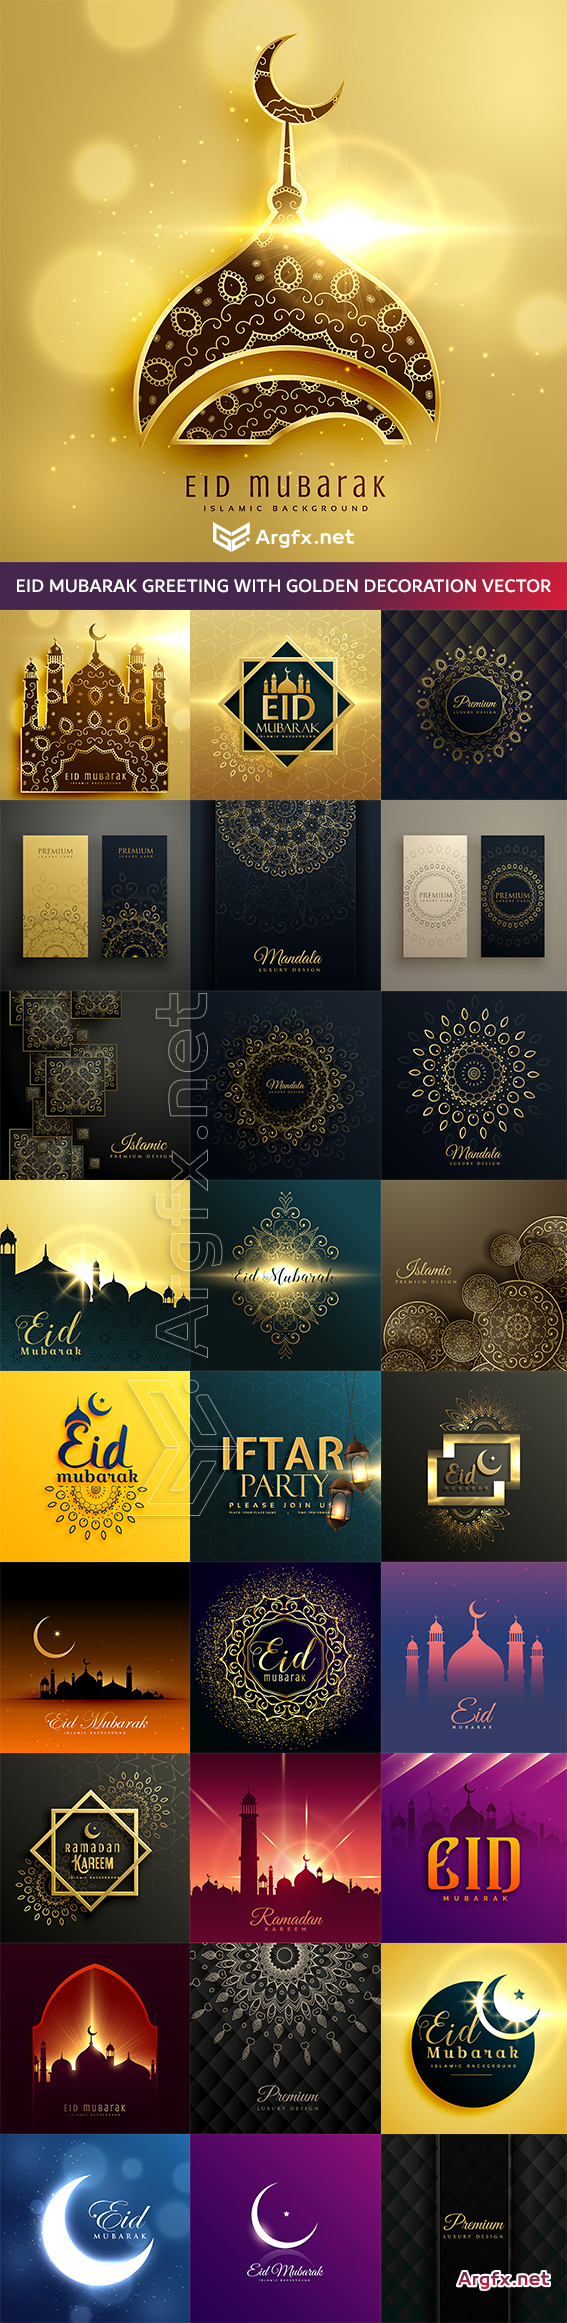 Eid mubarak greeting with golden decoration vector